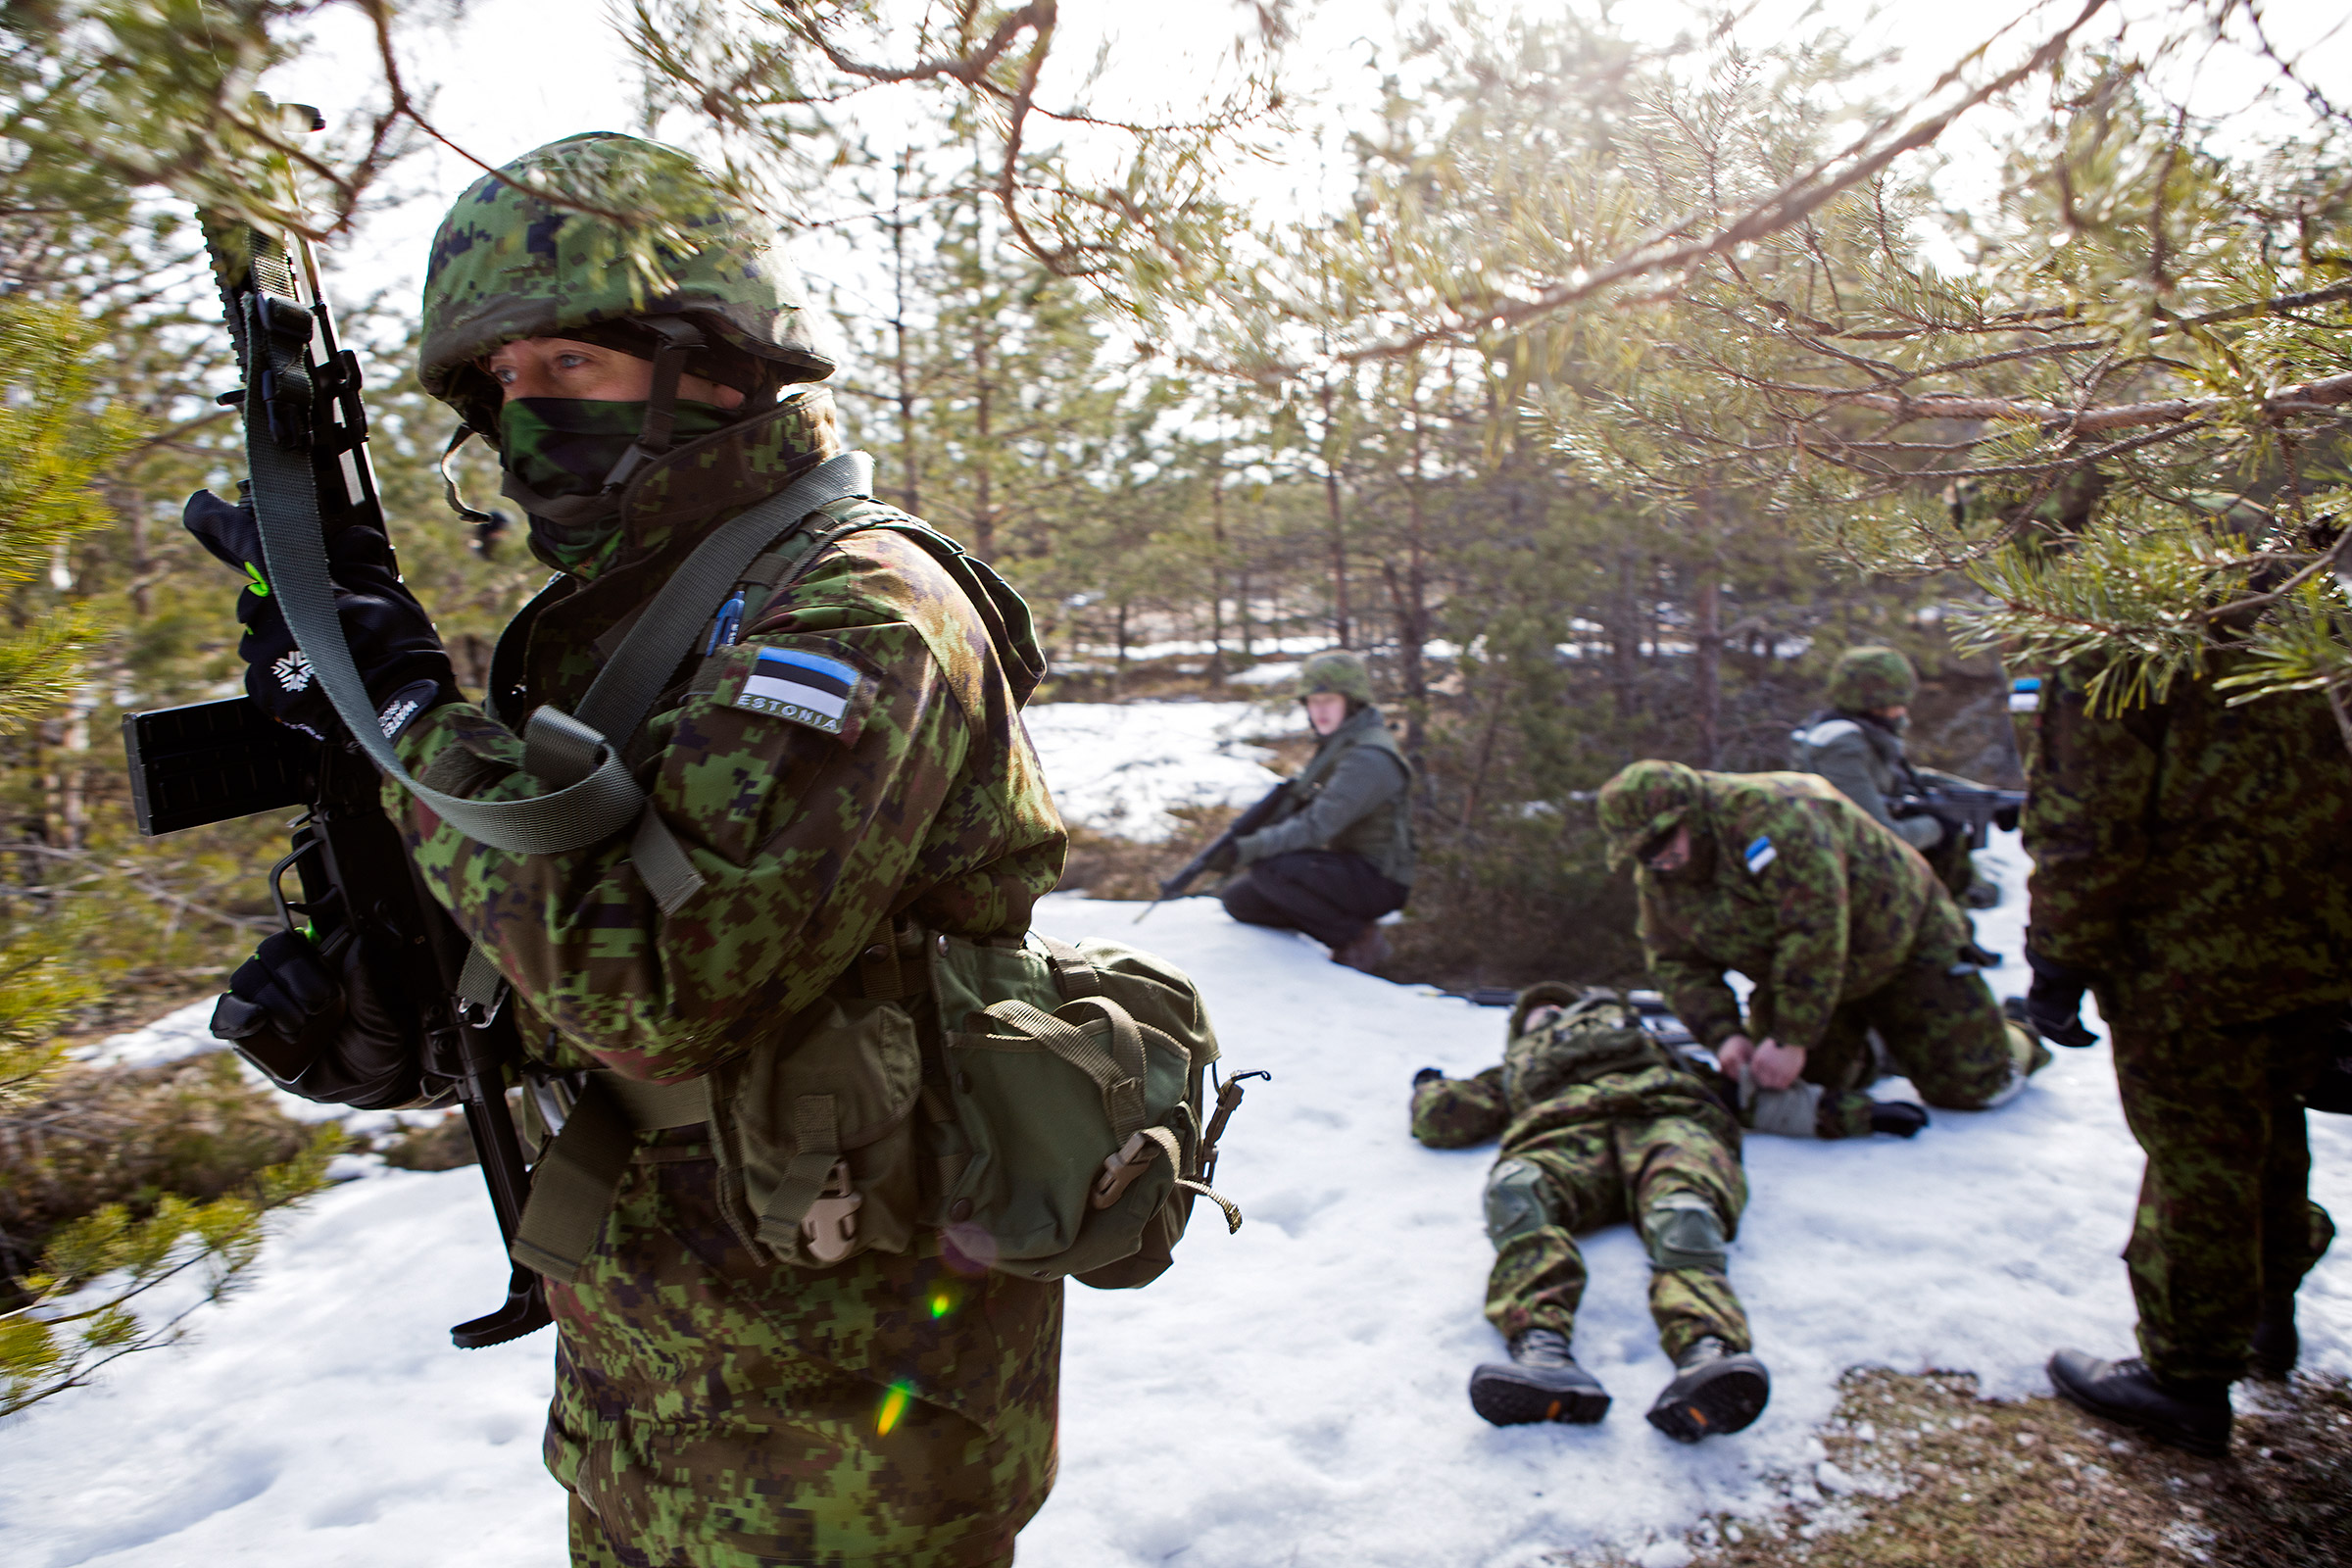 Trainees in the forest of Männiku, Estonia on March 27 (Birgit Püve for TIME)